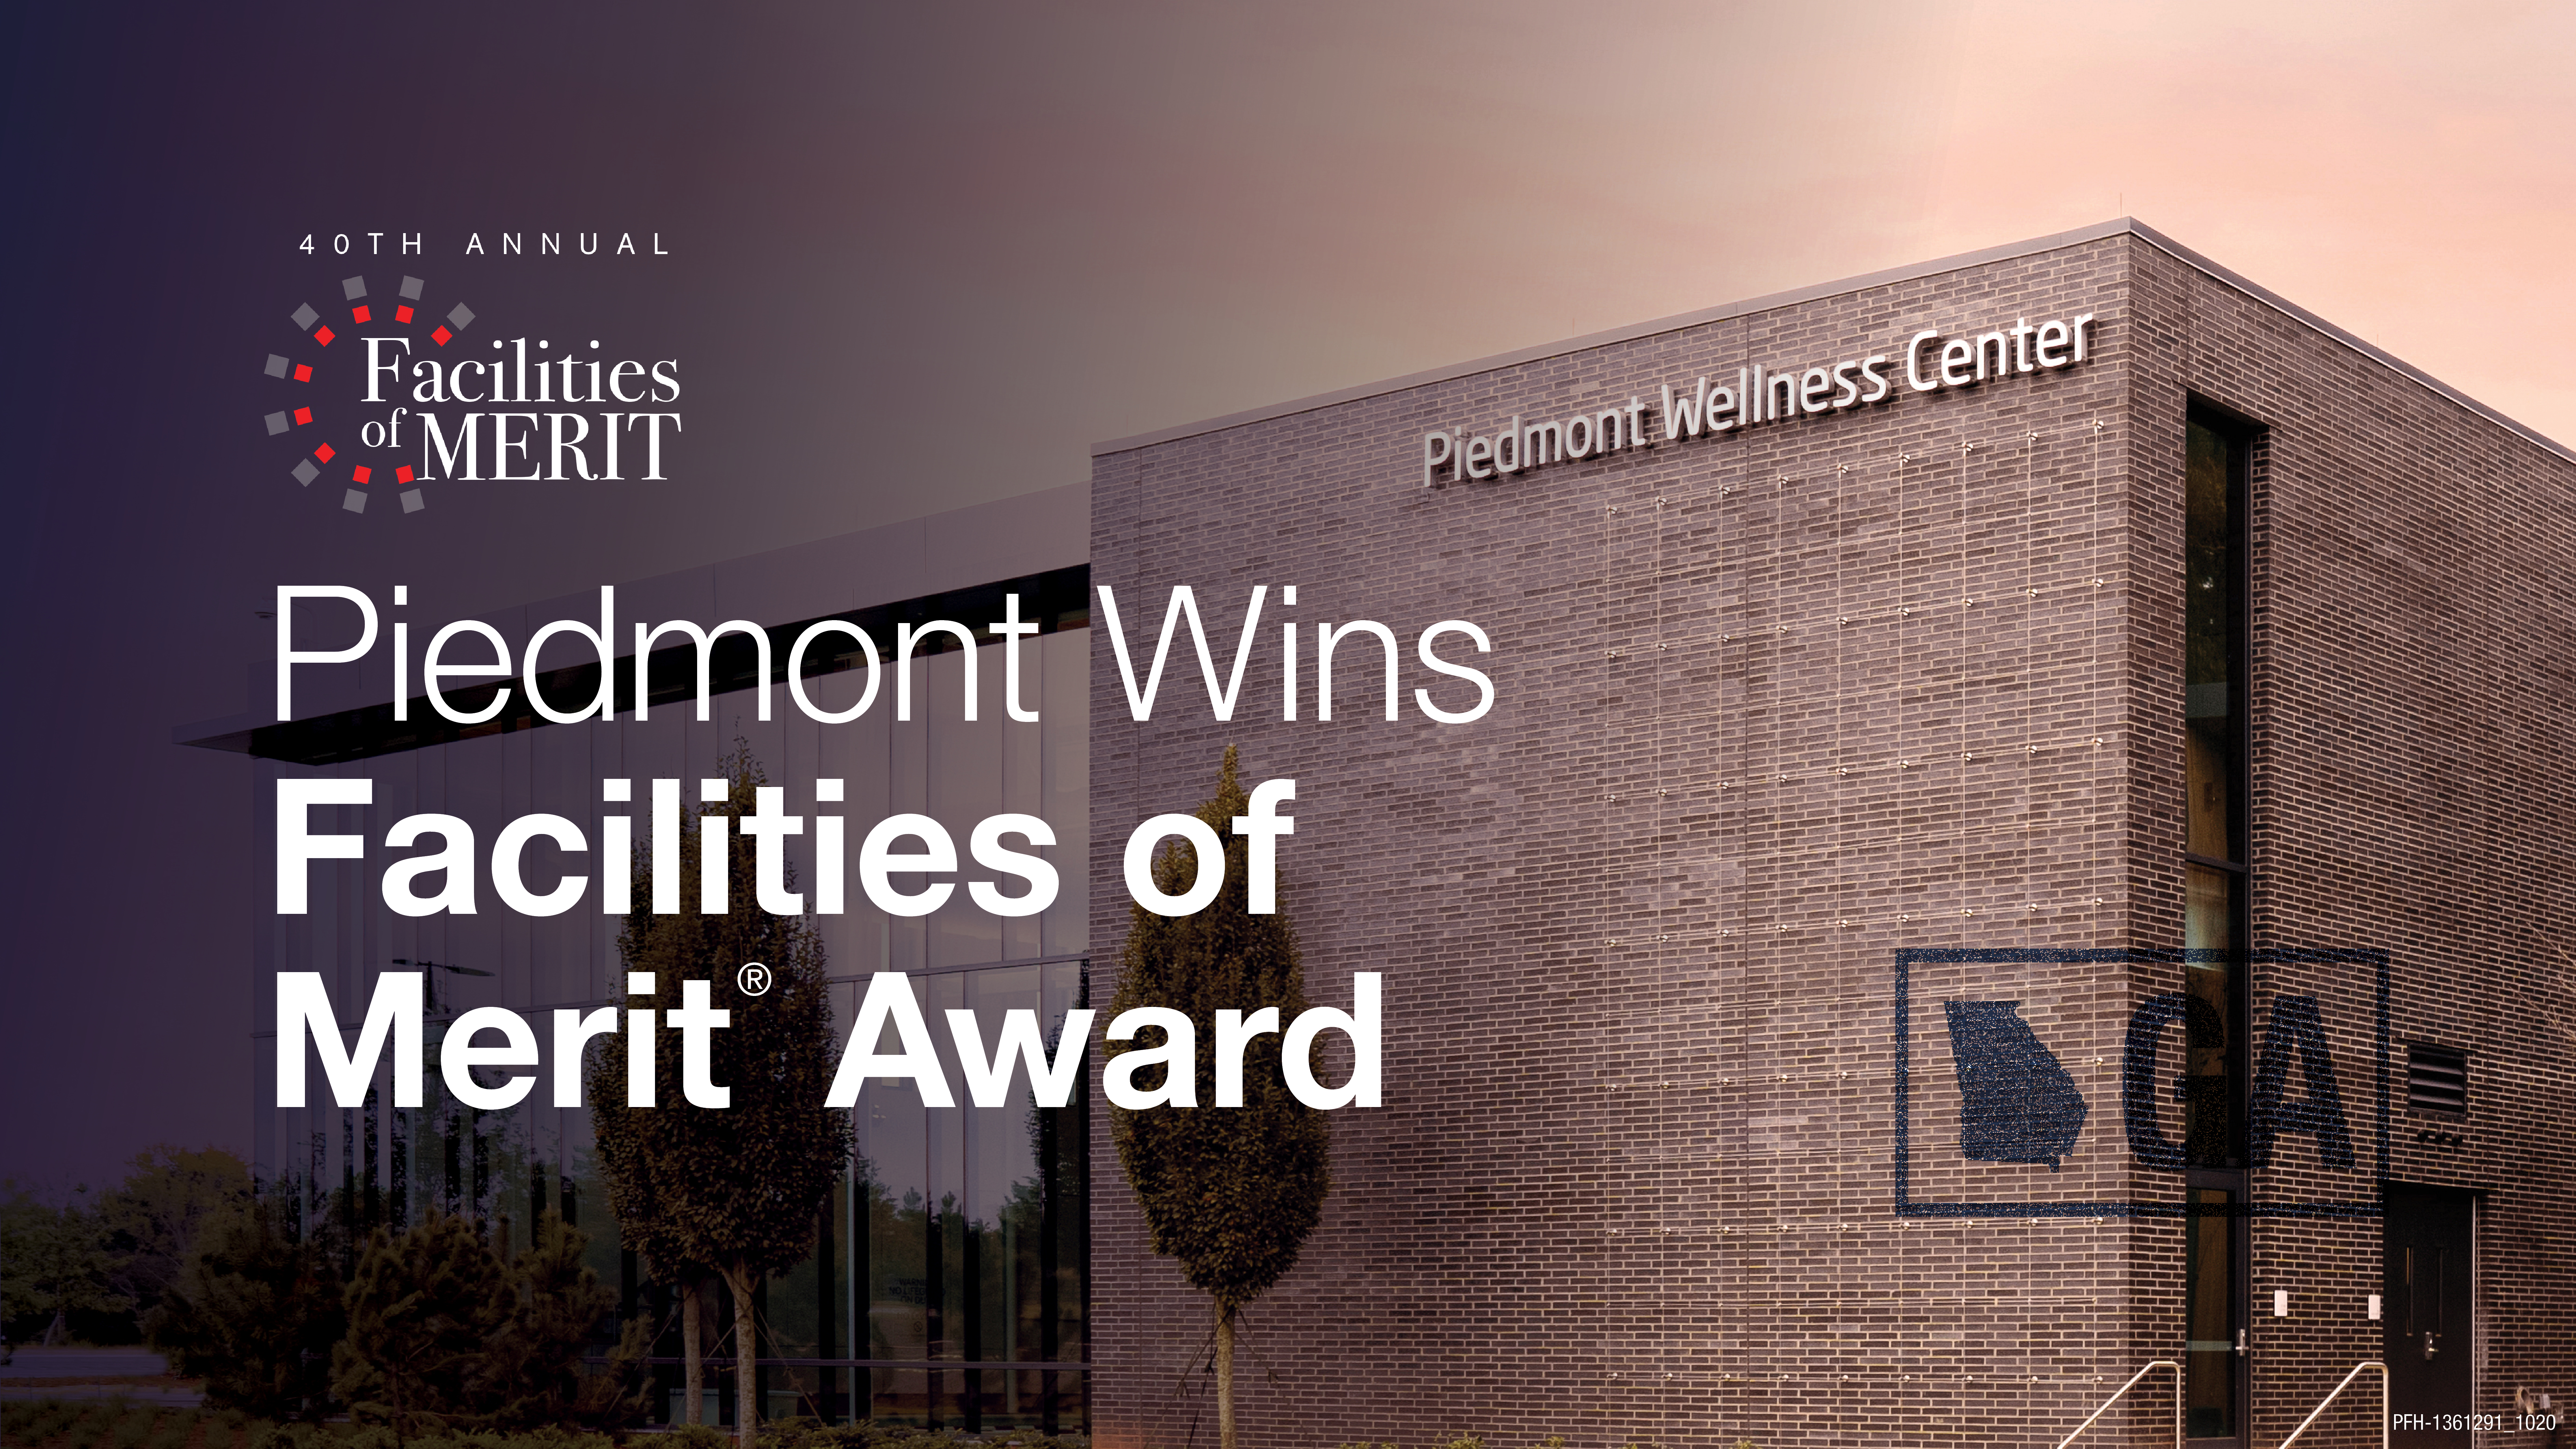 Facilities of Merit® Honor Awarded to Piedmont Wellness Center